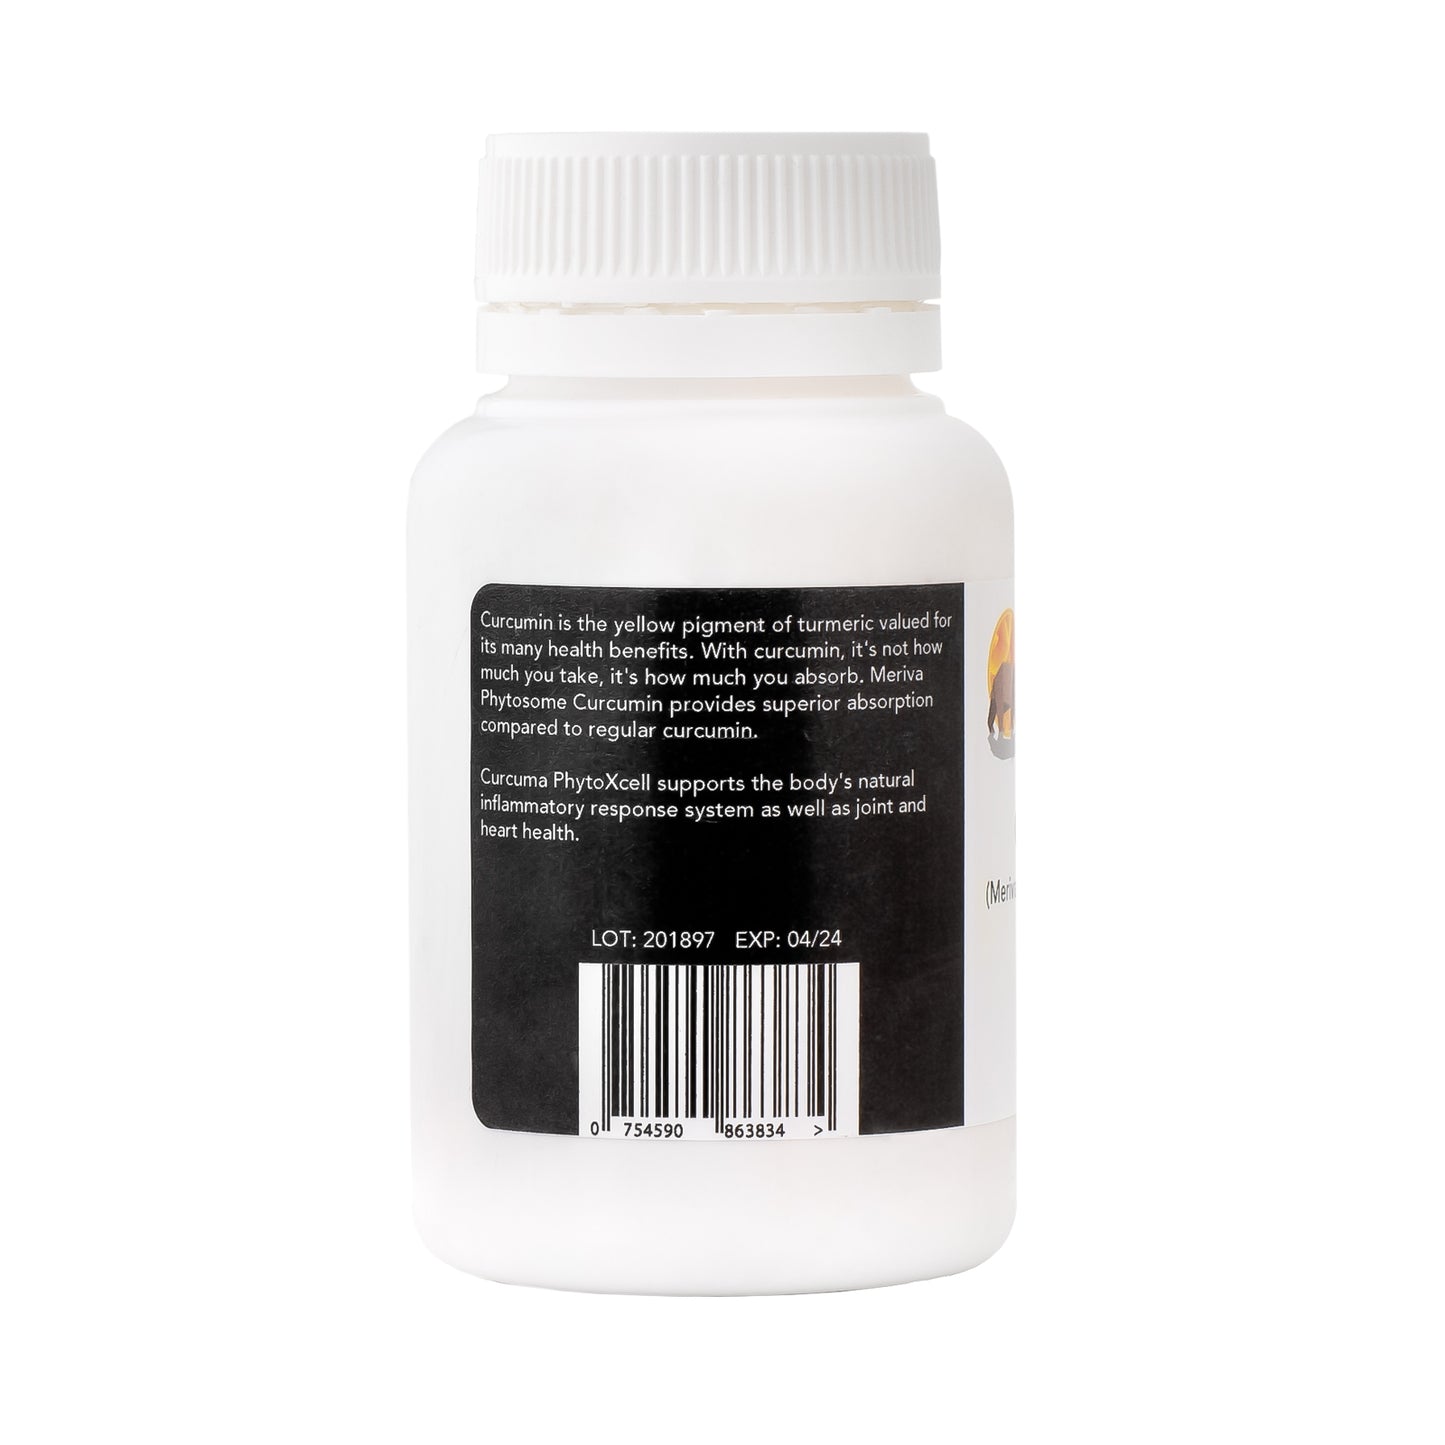 Sunbear Health Supplies - Curcumin (60 Caps) 500Mg